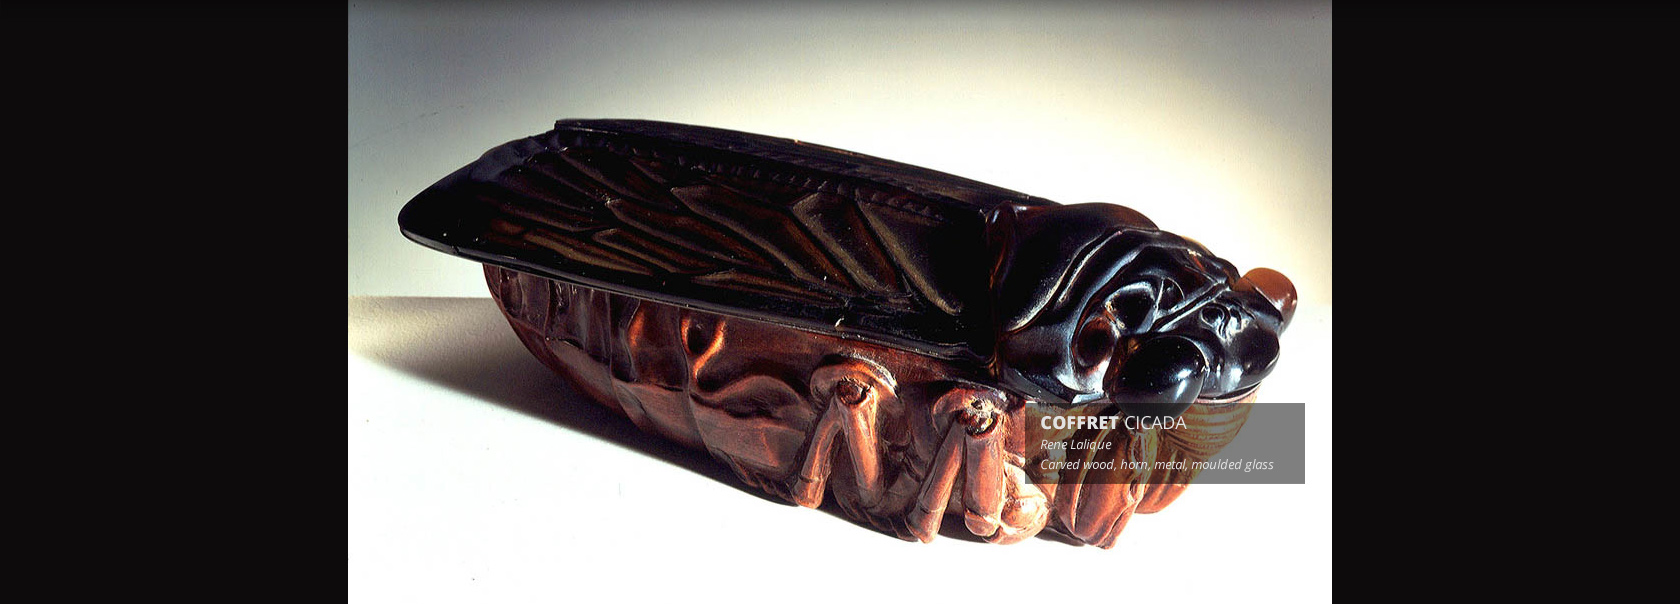 Coffret Cicada by Rene Lalique